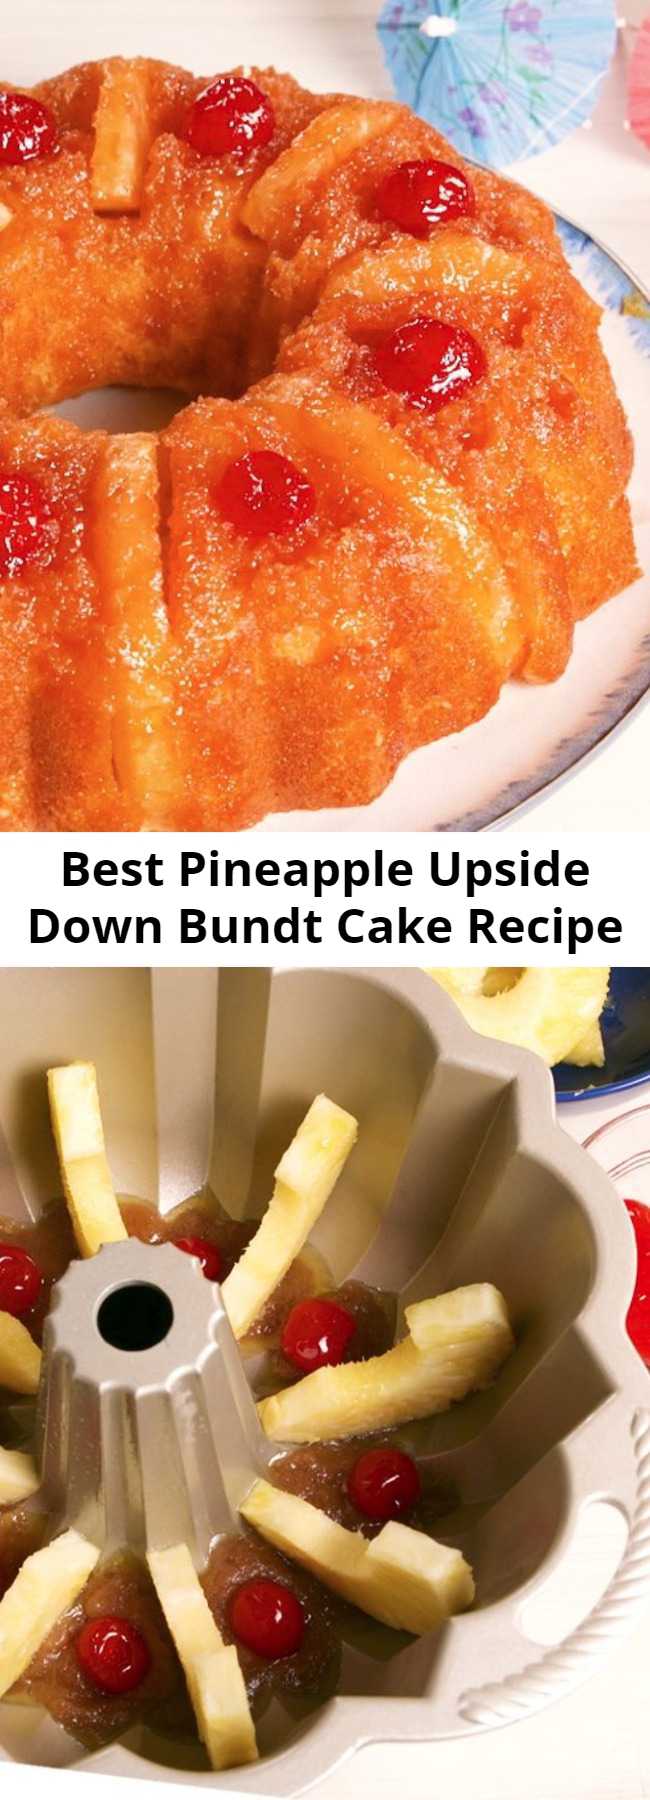 Best Pineapple Upside Down Bundt Cake Recipe - This Pineapple Upside Down Bundt Cake tastes like vacation. Stunning. #pineapple #upsidedowncake #pineapplecake #pineapplejuice #cherries #summertreat